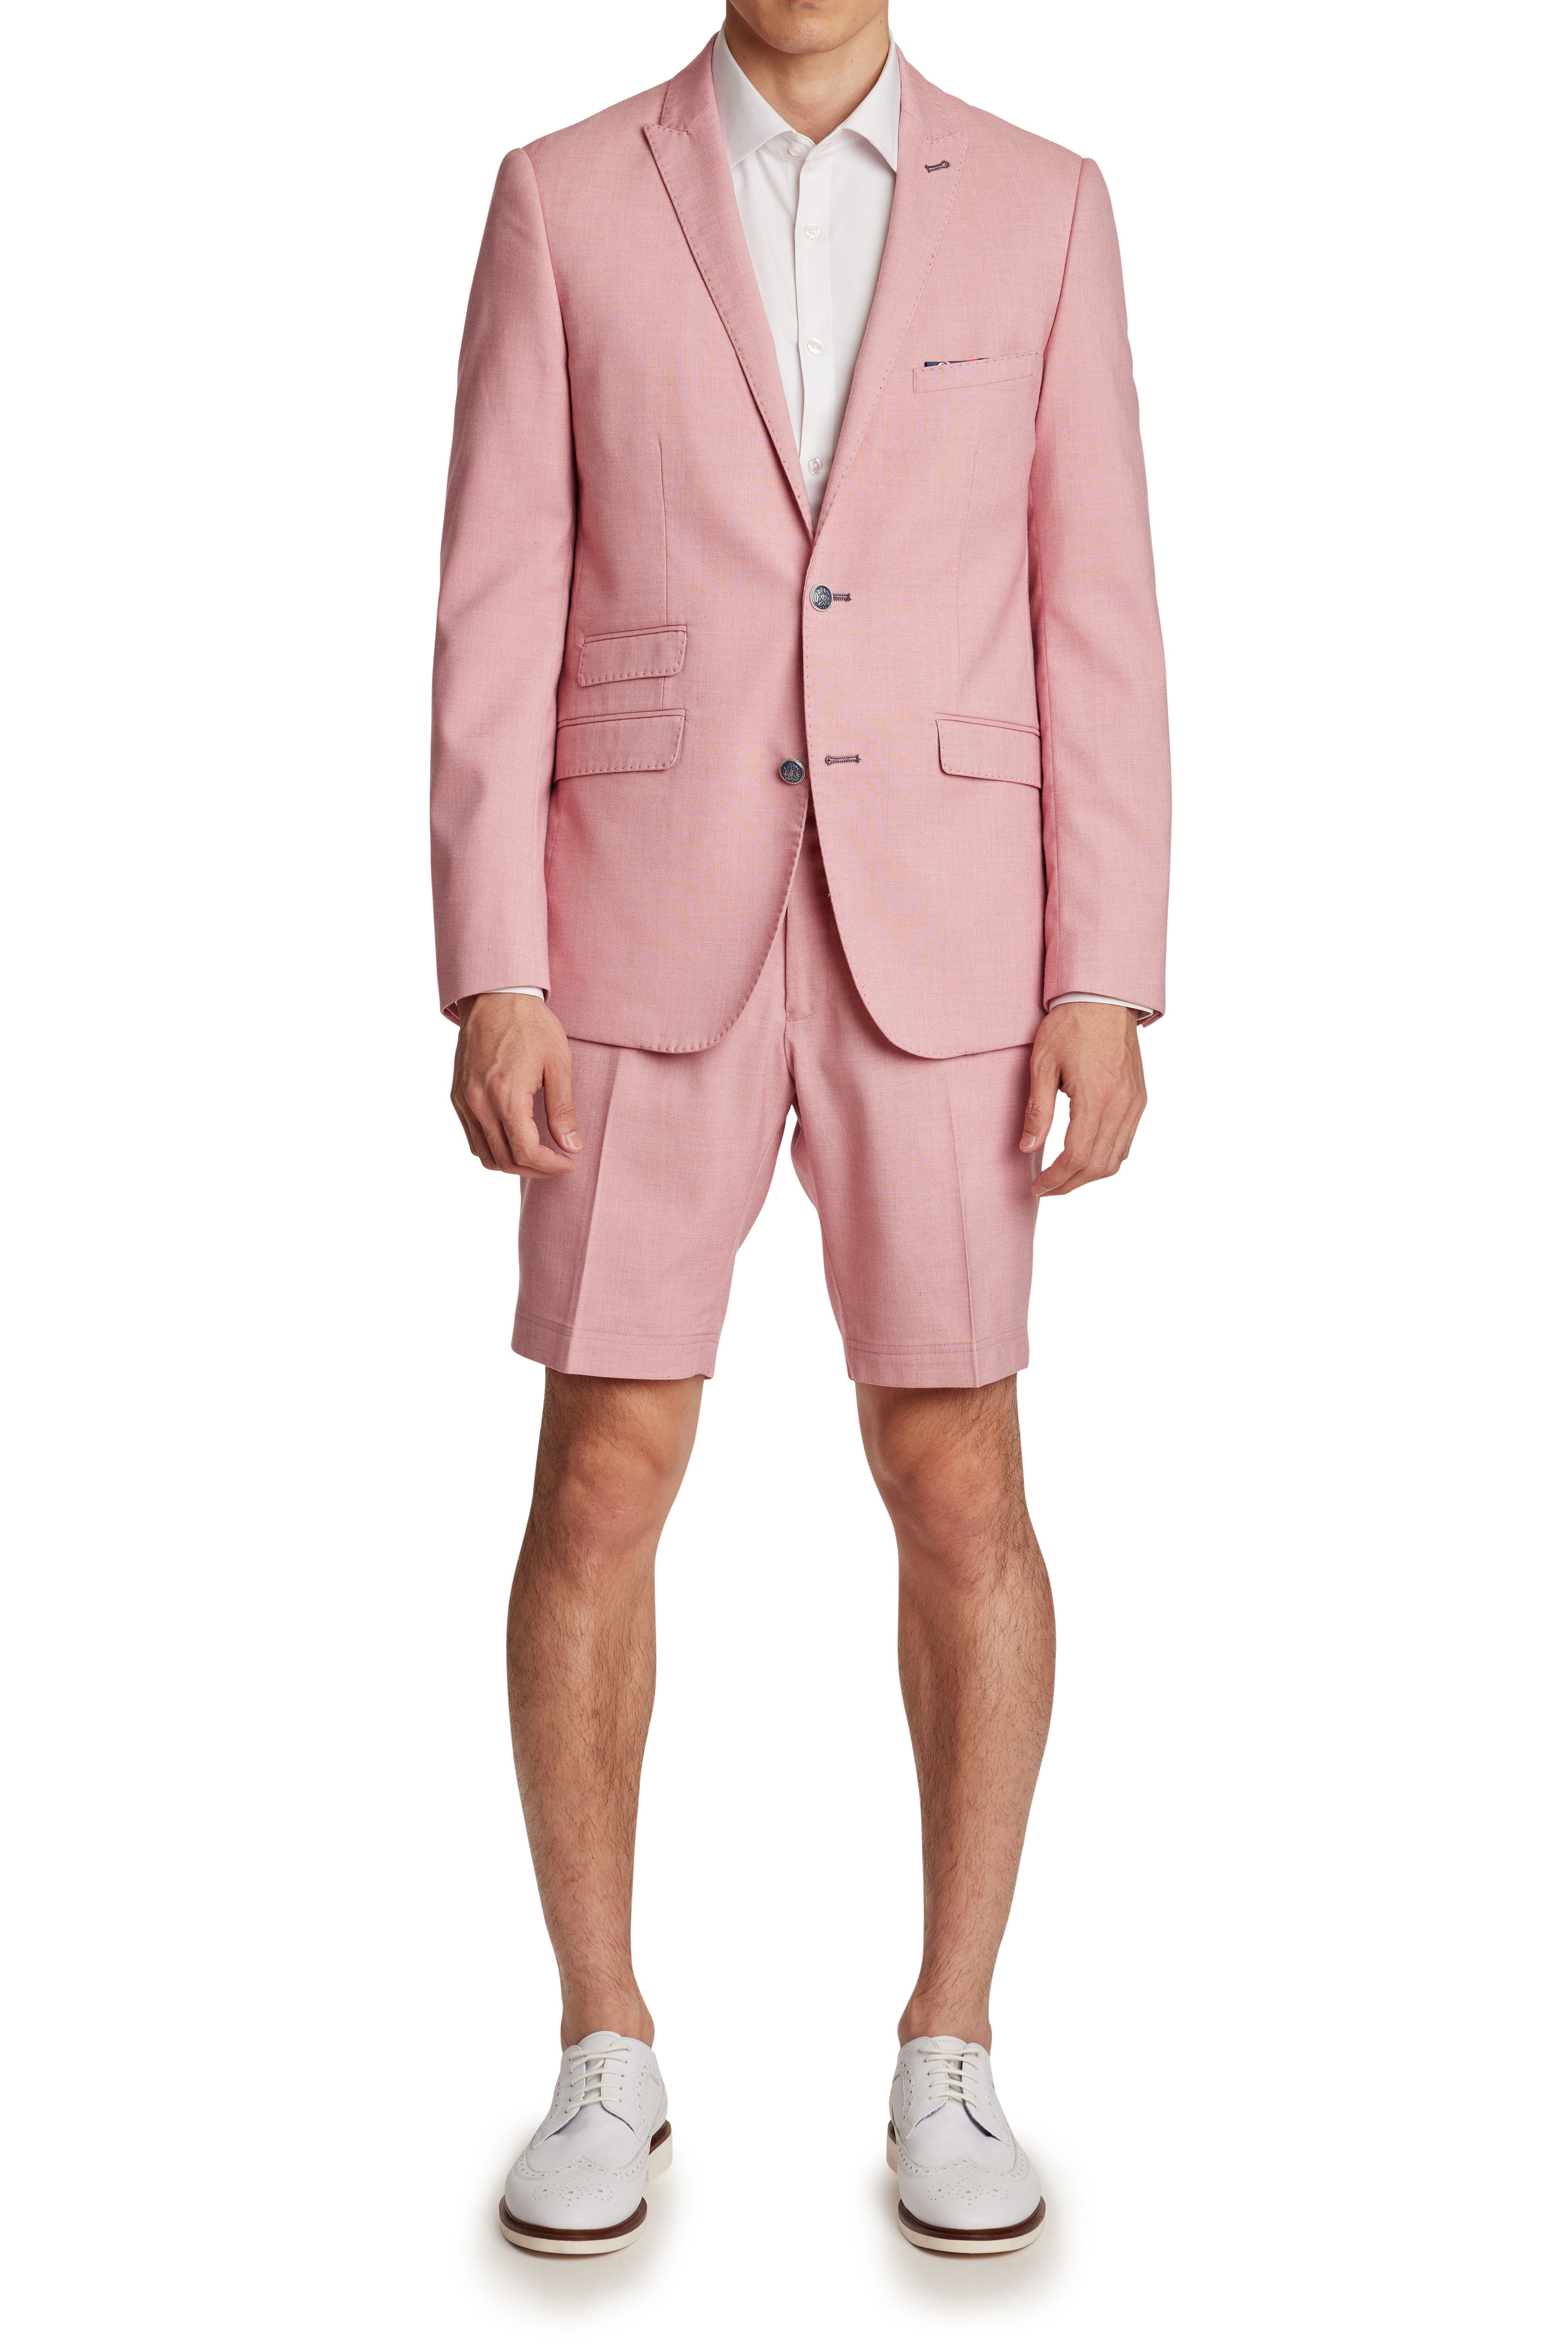 Fairview Shorts - slim - Pink Carnation